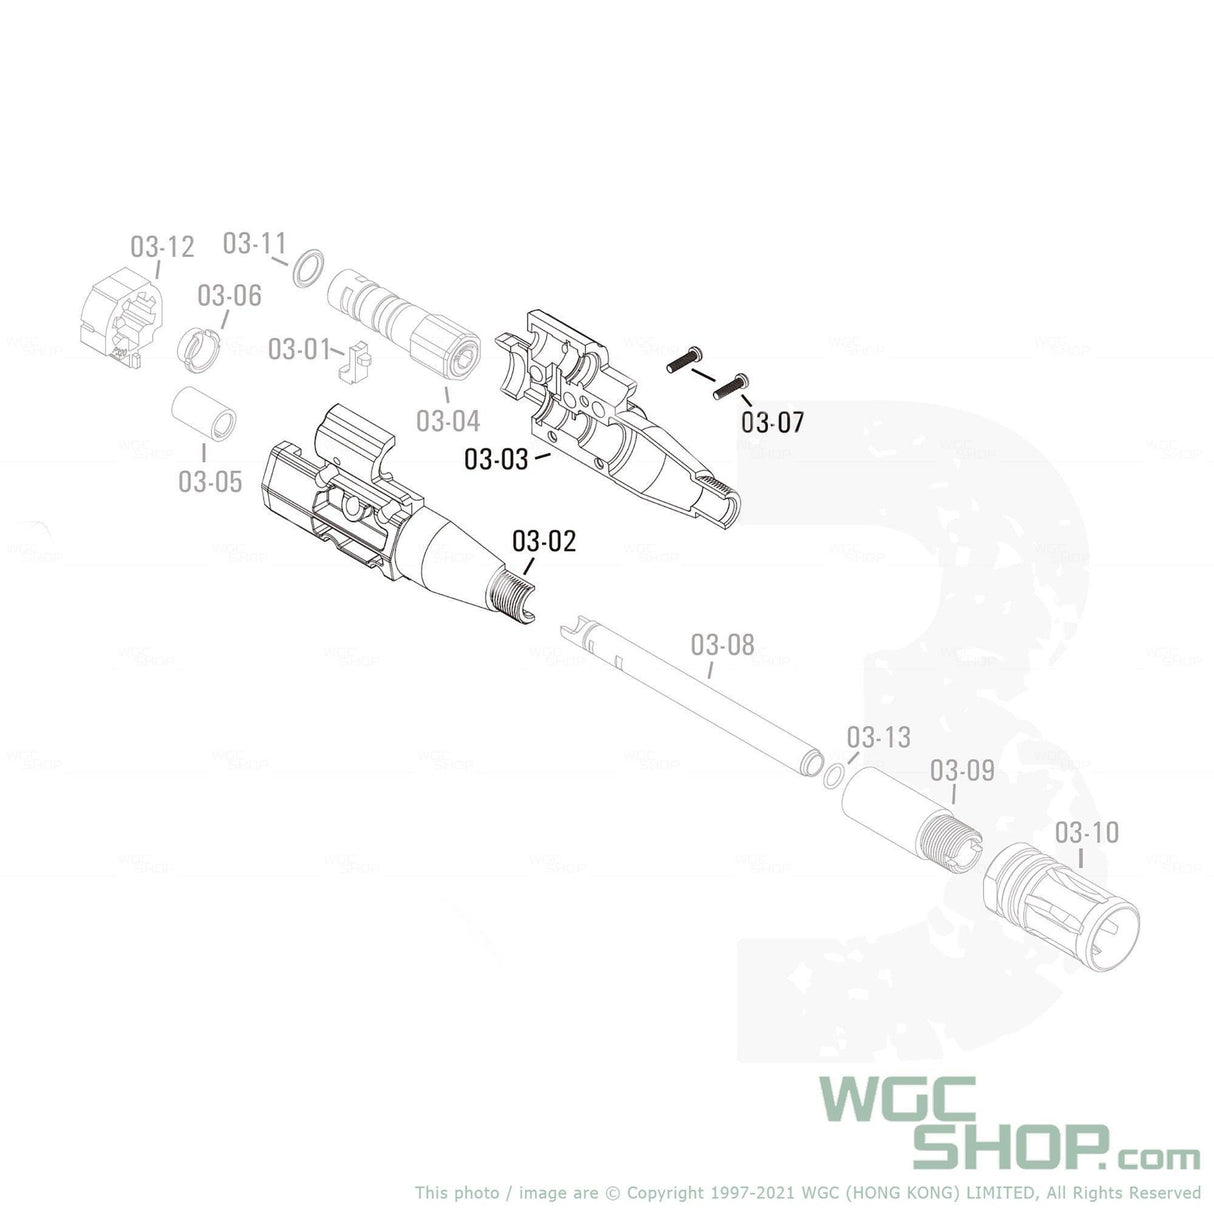 APFG Original Parts - MPX GBB Hop-Up Base with Screws ( 03-02 / 03-03 / 03-07 x 2 ) - WGC Shop